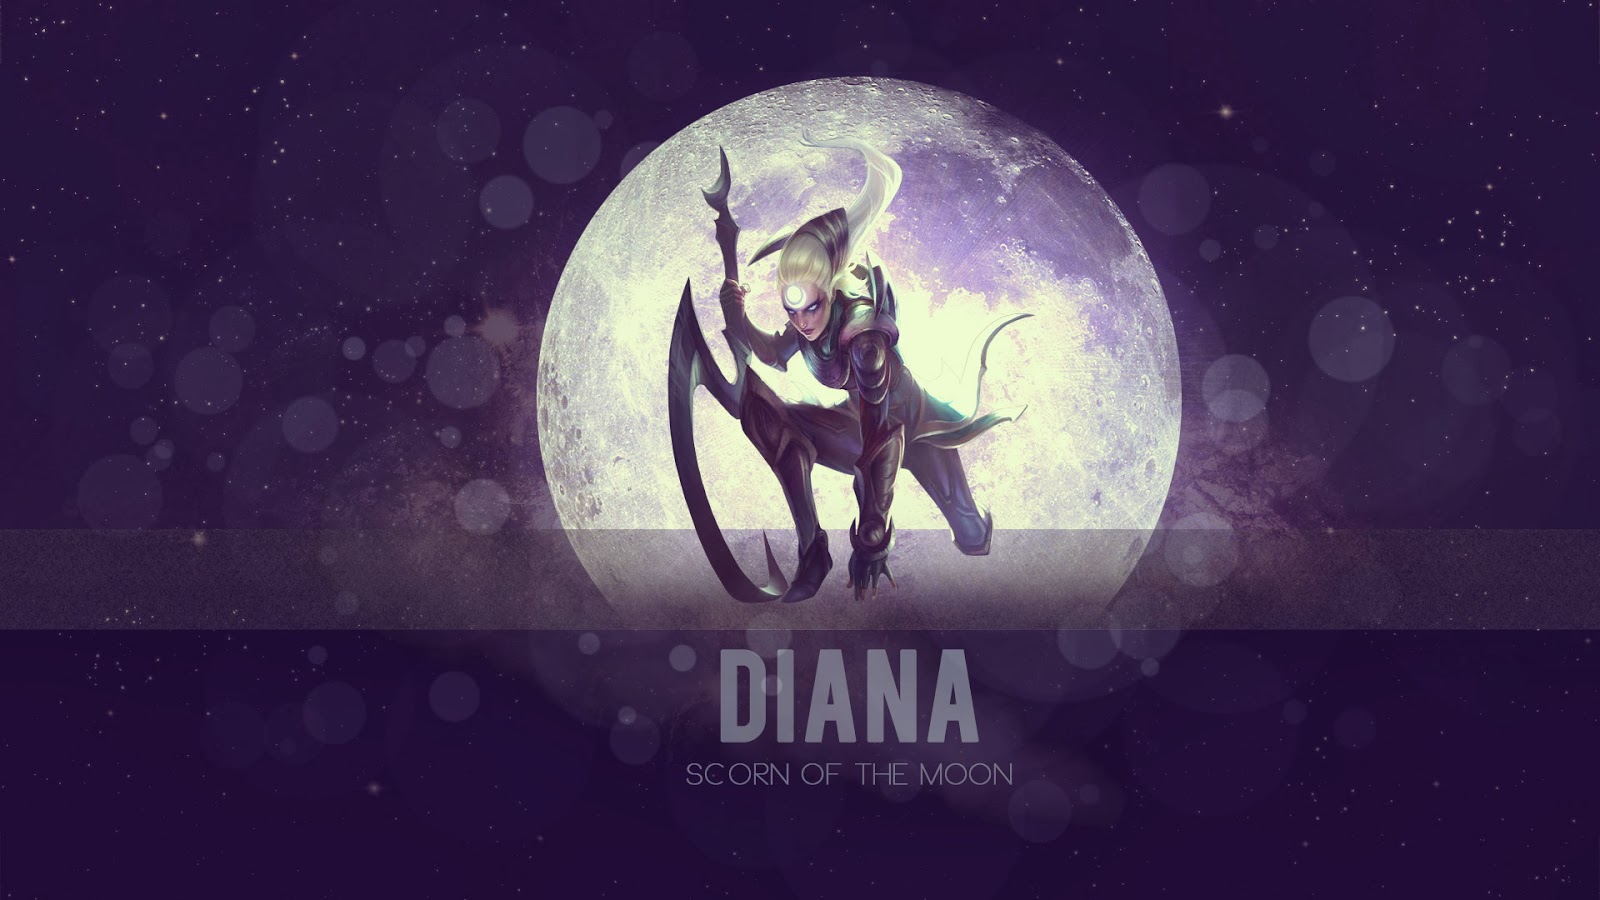 Diana League of Legends Wallpaper